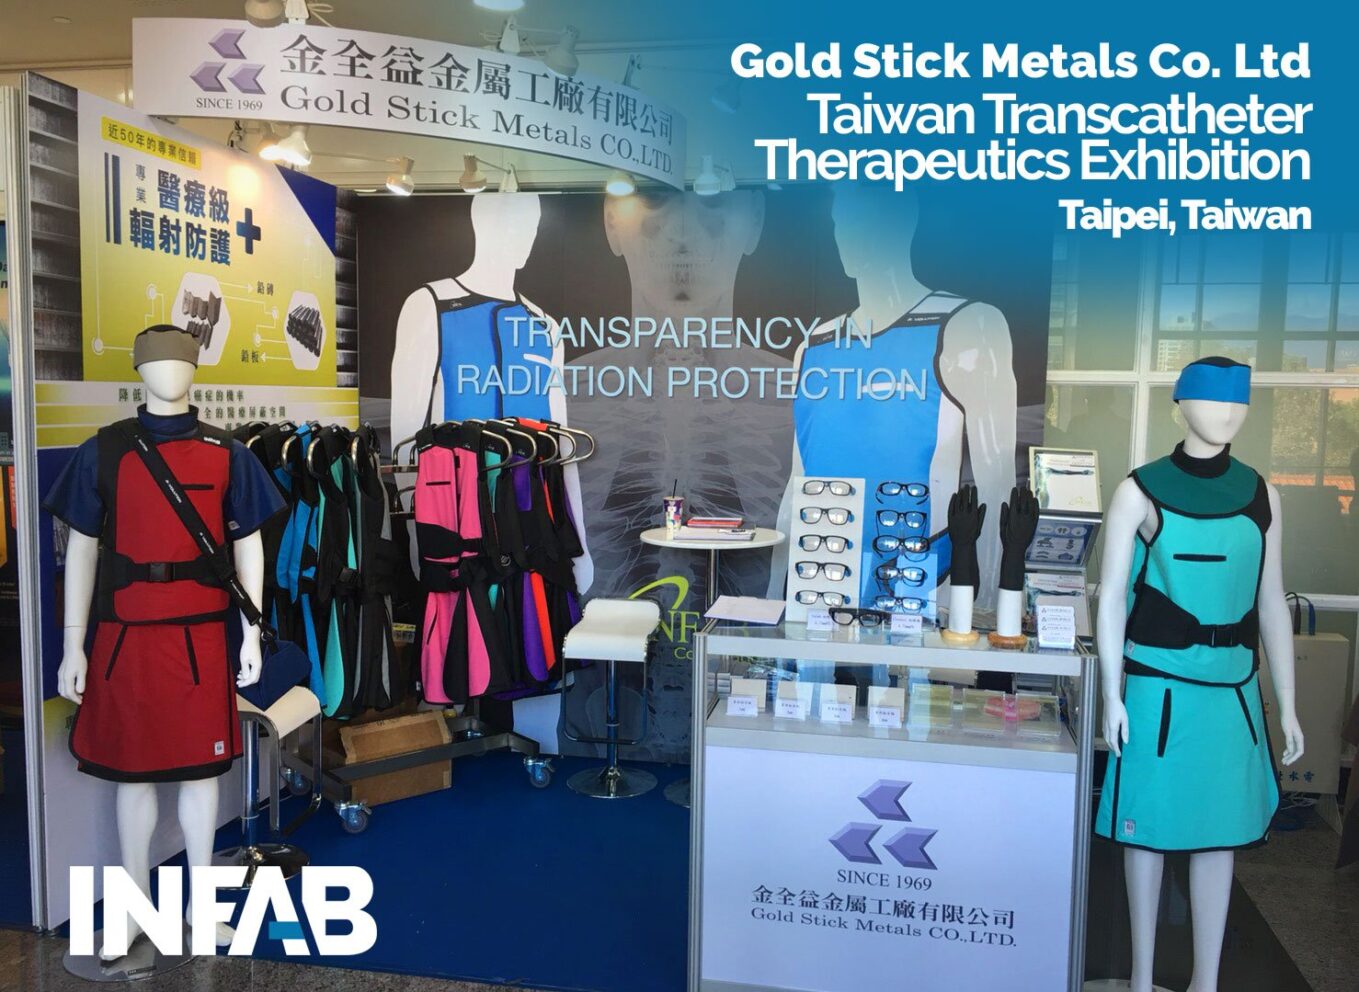 Gold Stick Metals Co. Ltd Showcases Infab at Taiwan Transcatheter Therapeutics Exhibition in Taipei, Taiwan